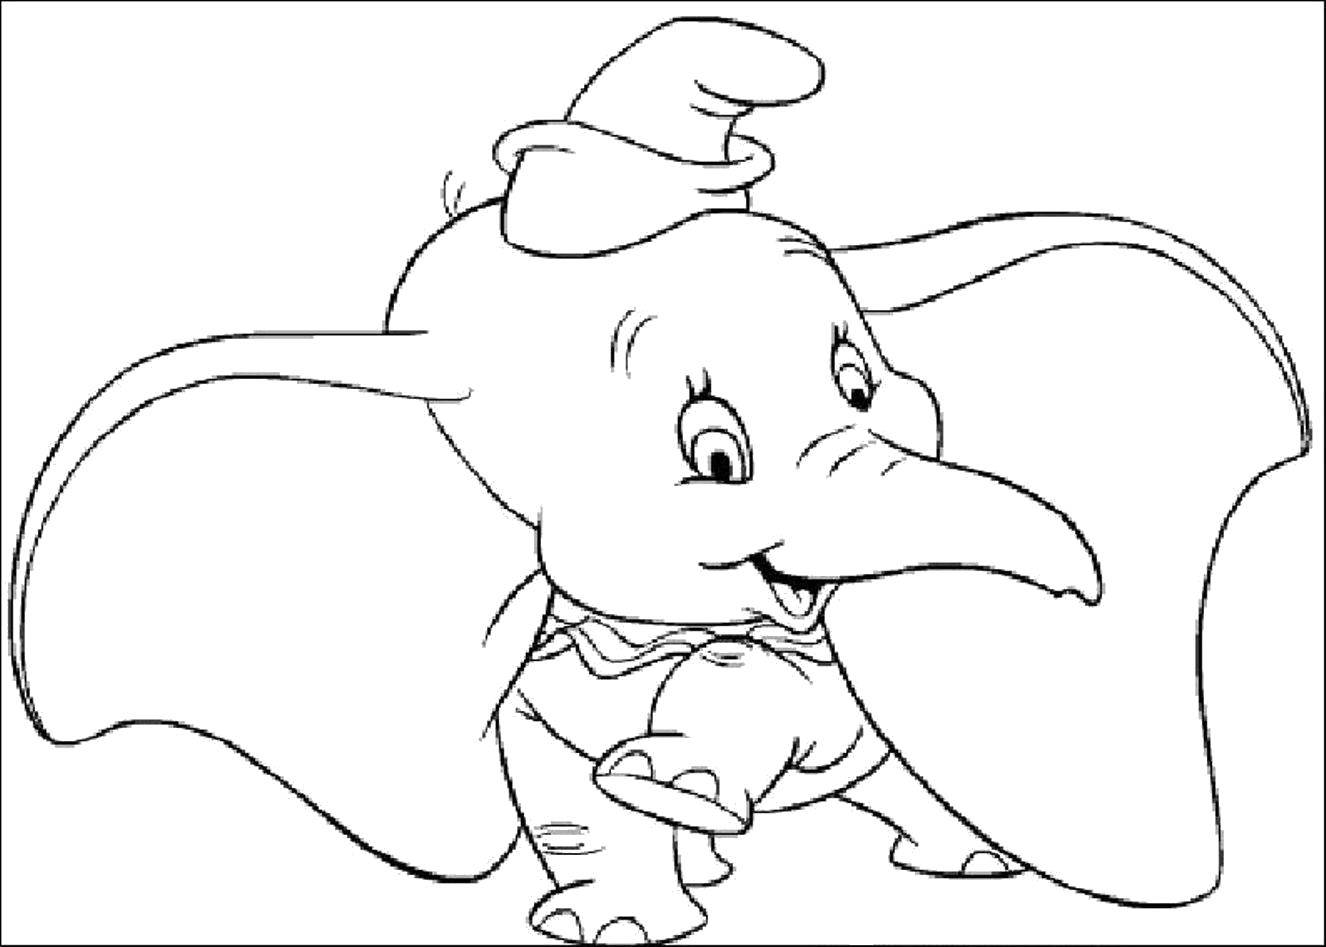 Coloring Baby elephant Dumbo. Category cartoons. Tags:  Dumbo, Disney.